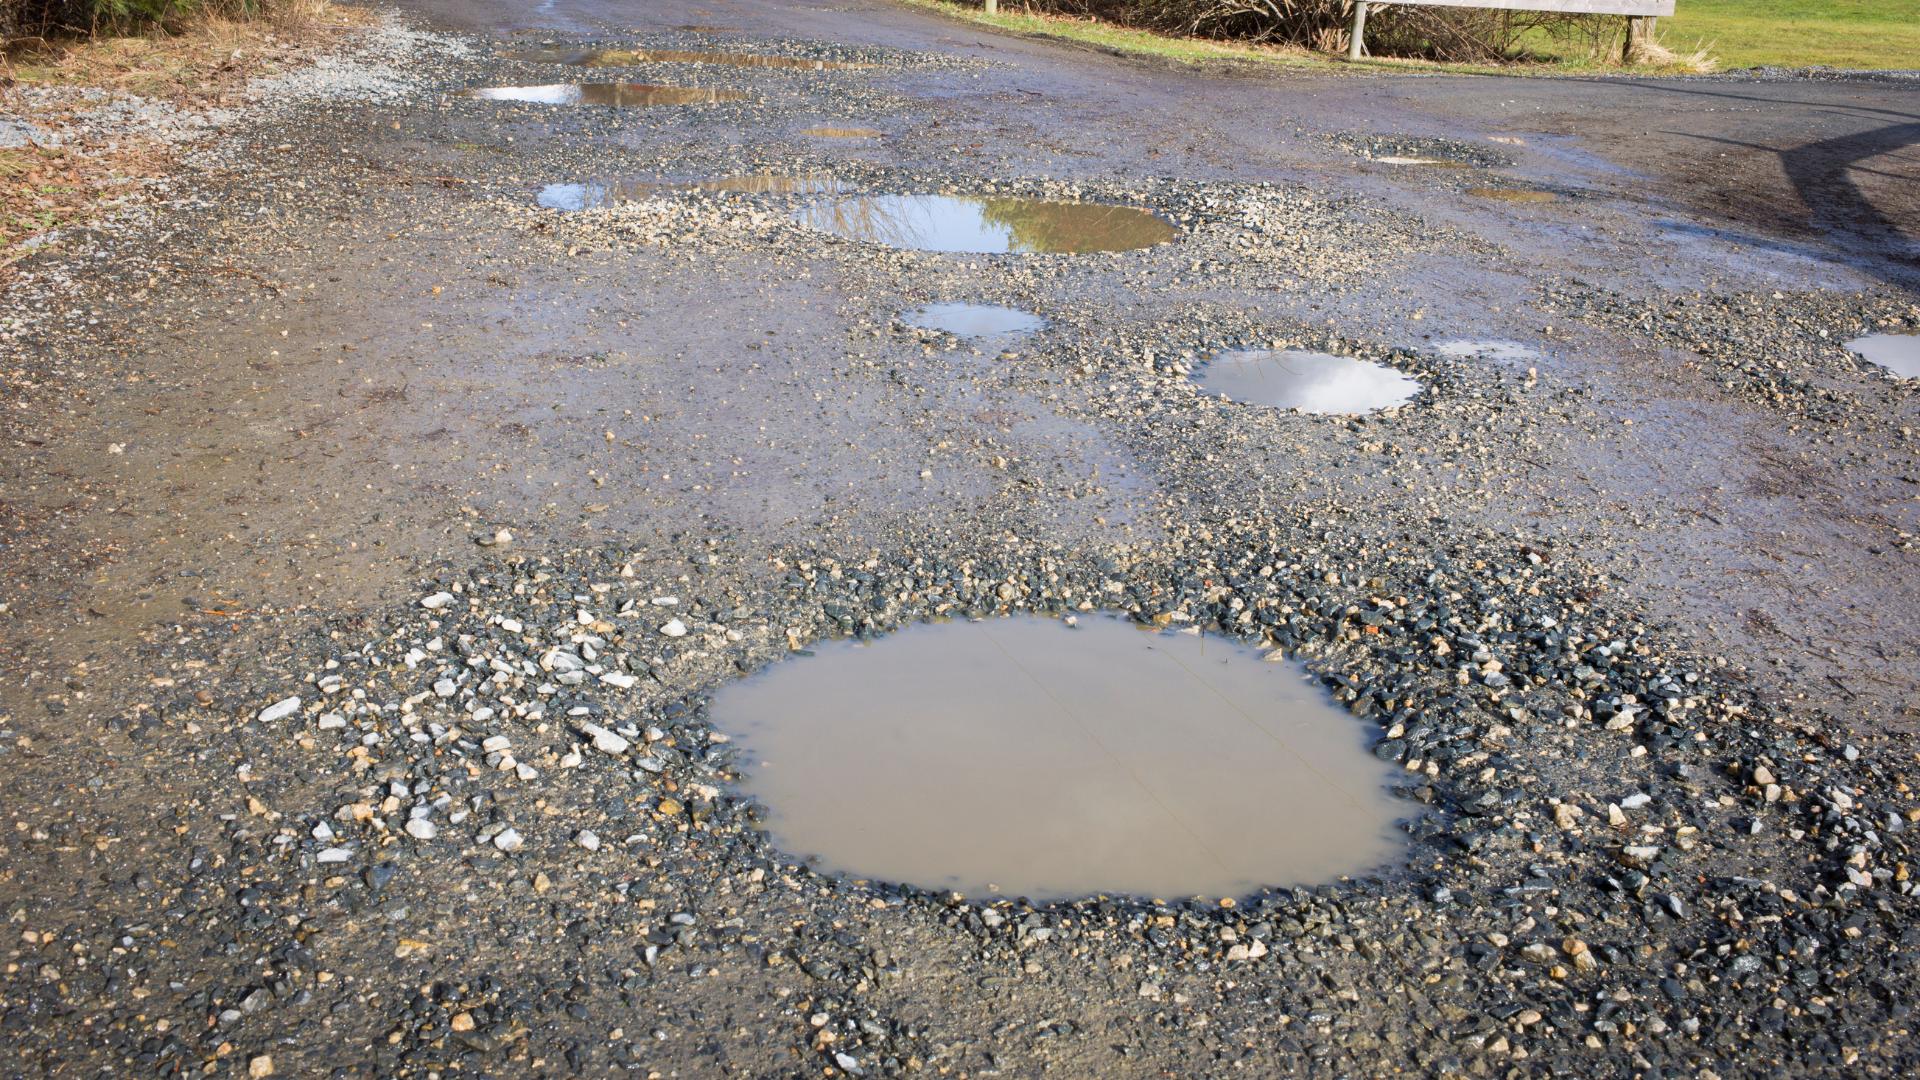 Cost of fixing potholes soars since invasion of Ukraine